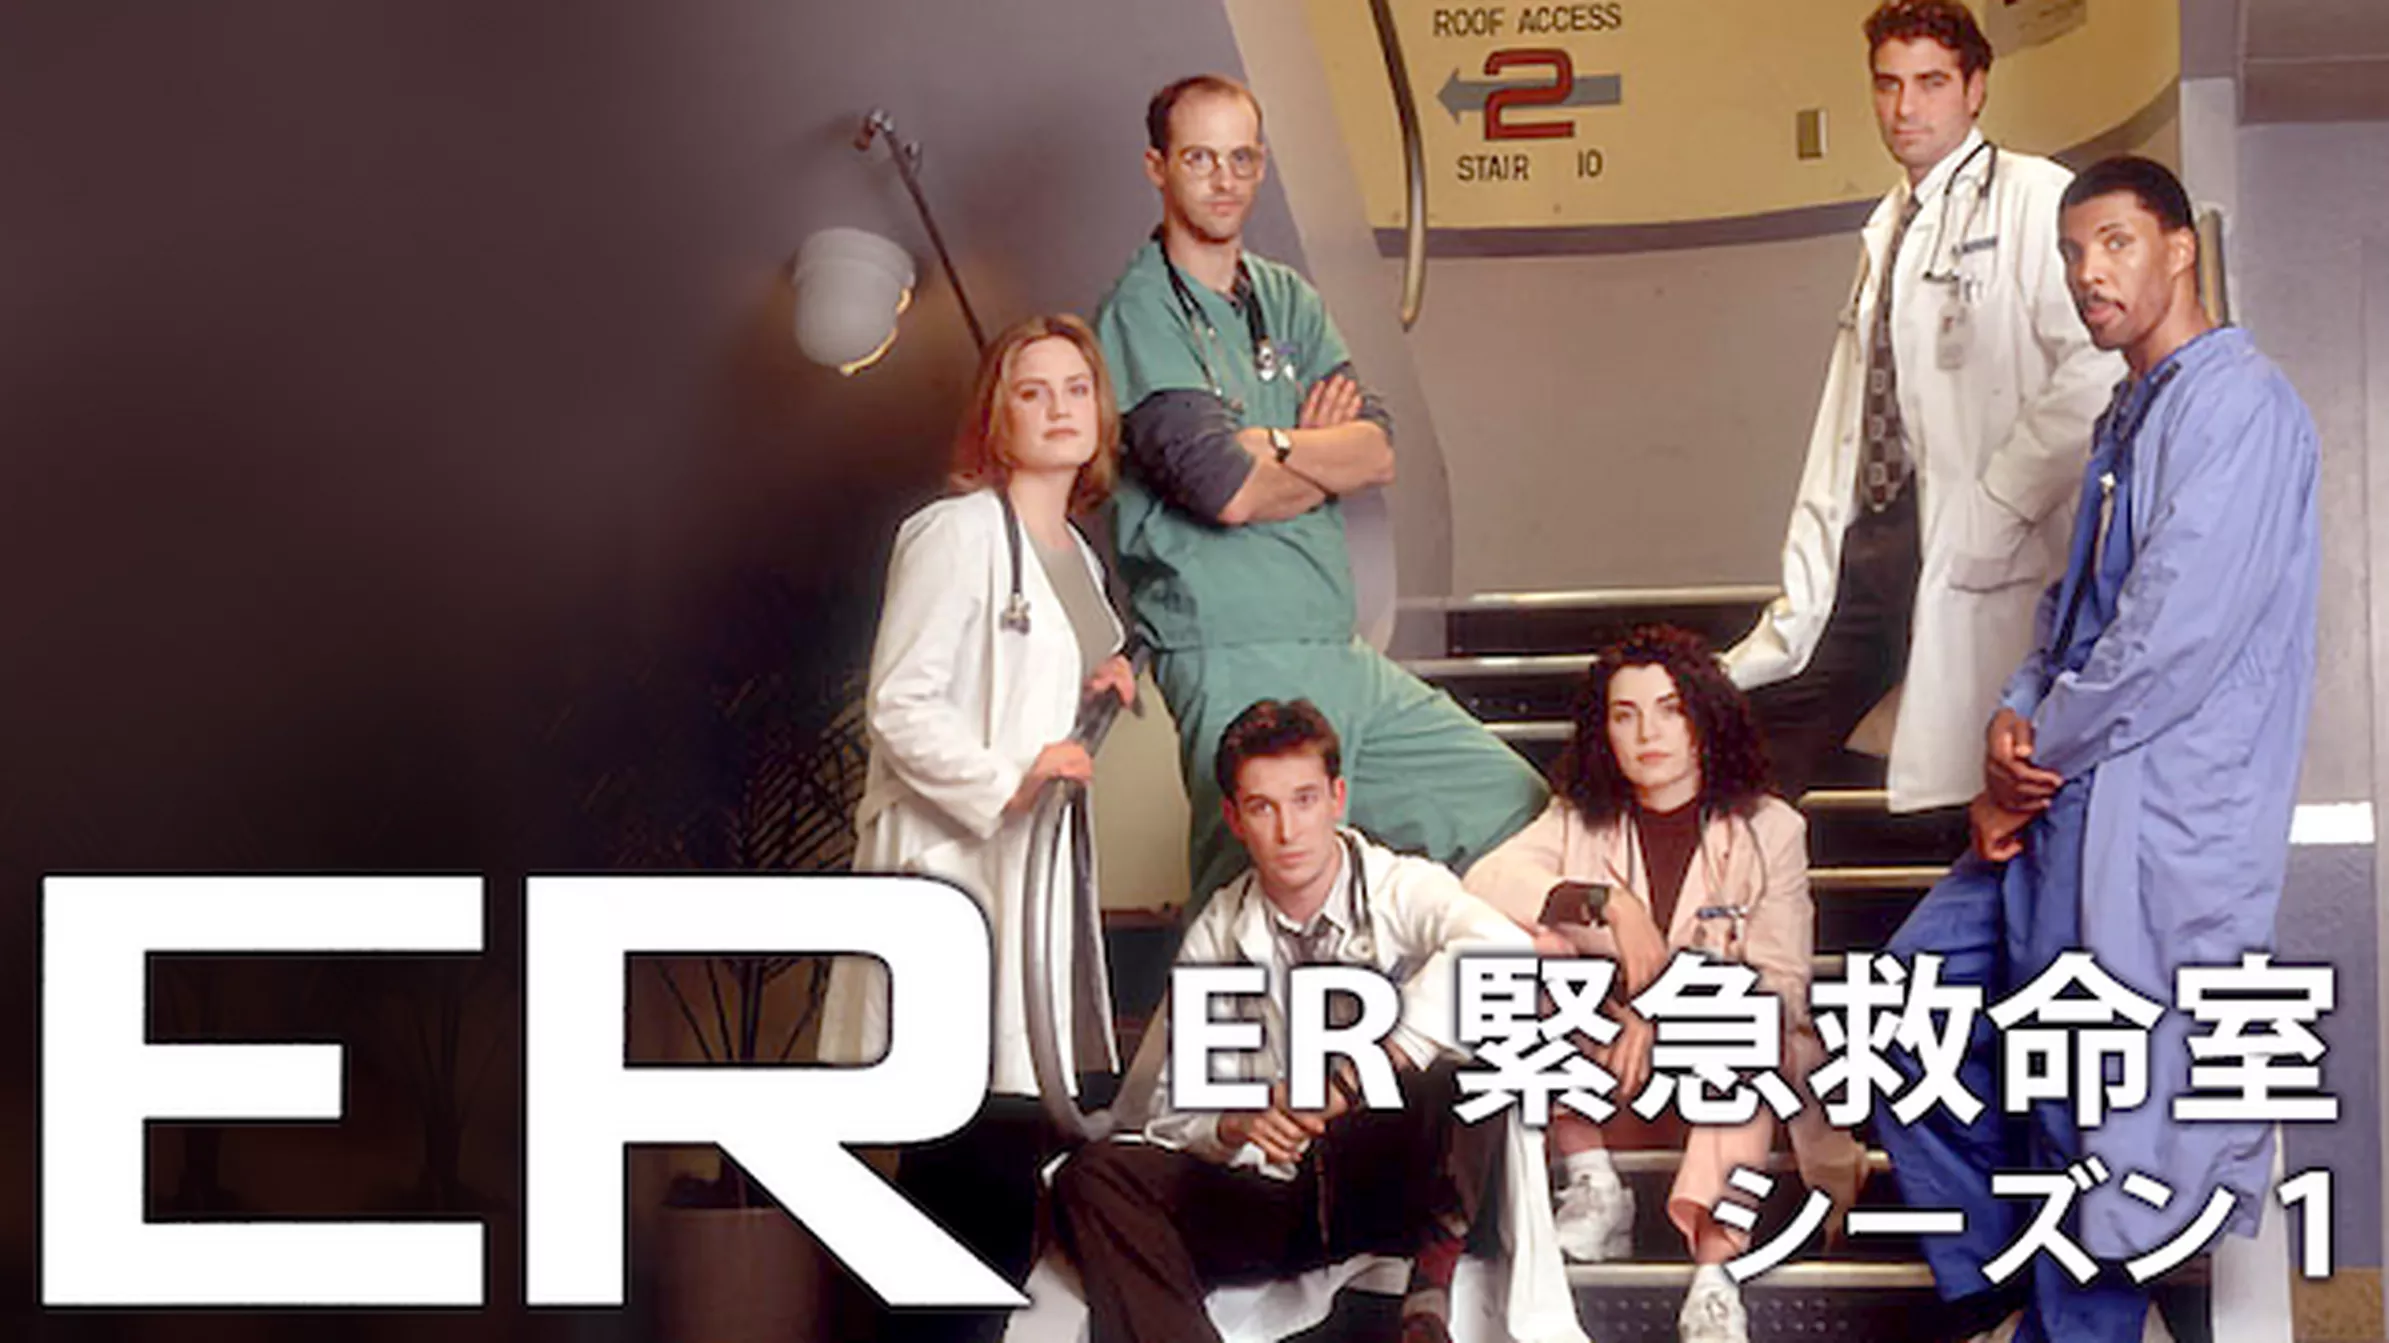 ER 緊急救命室 シーズン15(海外ドラマ / 2008) - 動画配信 | U-NEXT 31 ...